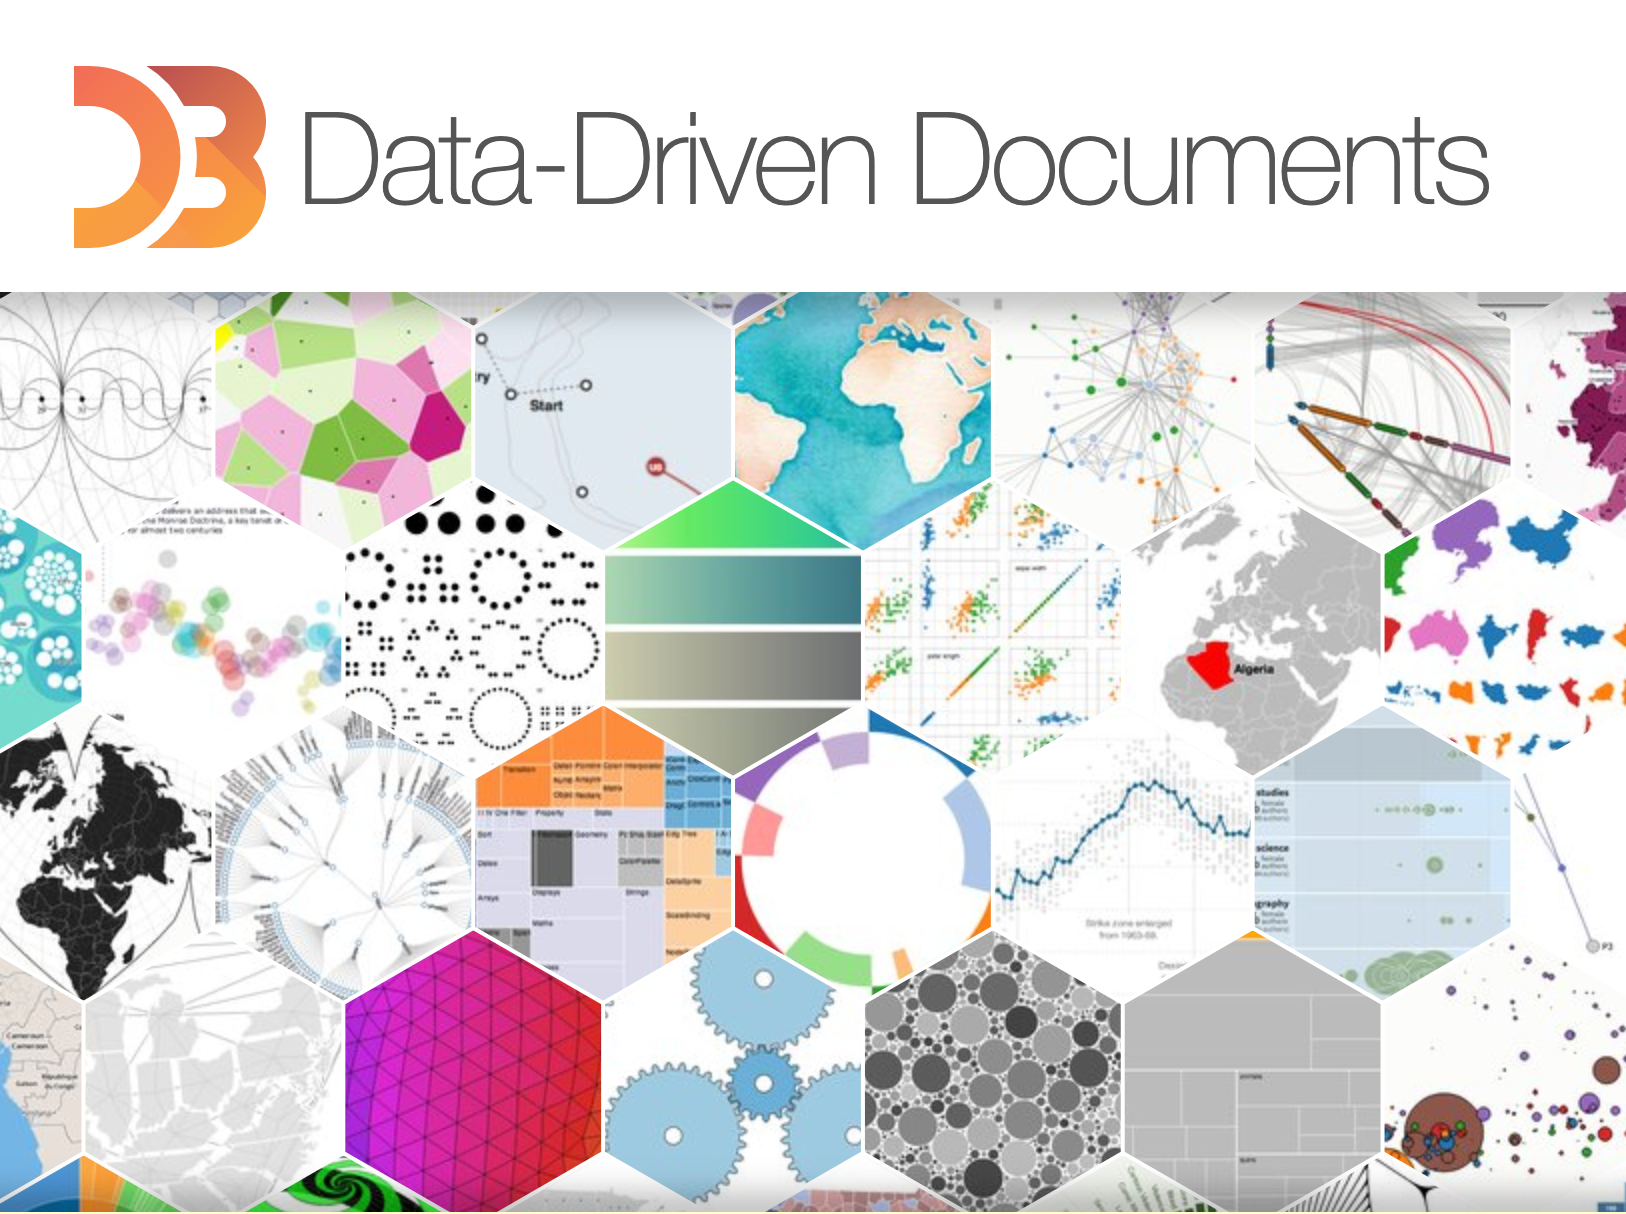 Data Visualization Charts Maps And Interactive Graphics